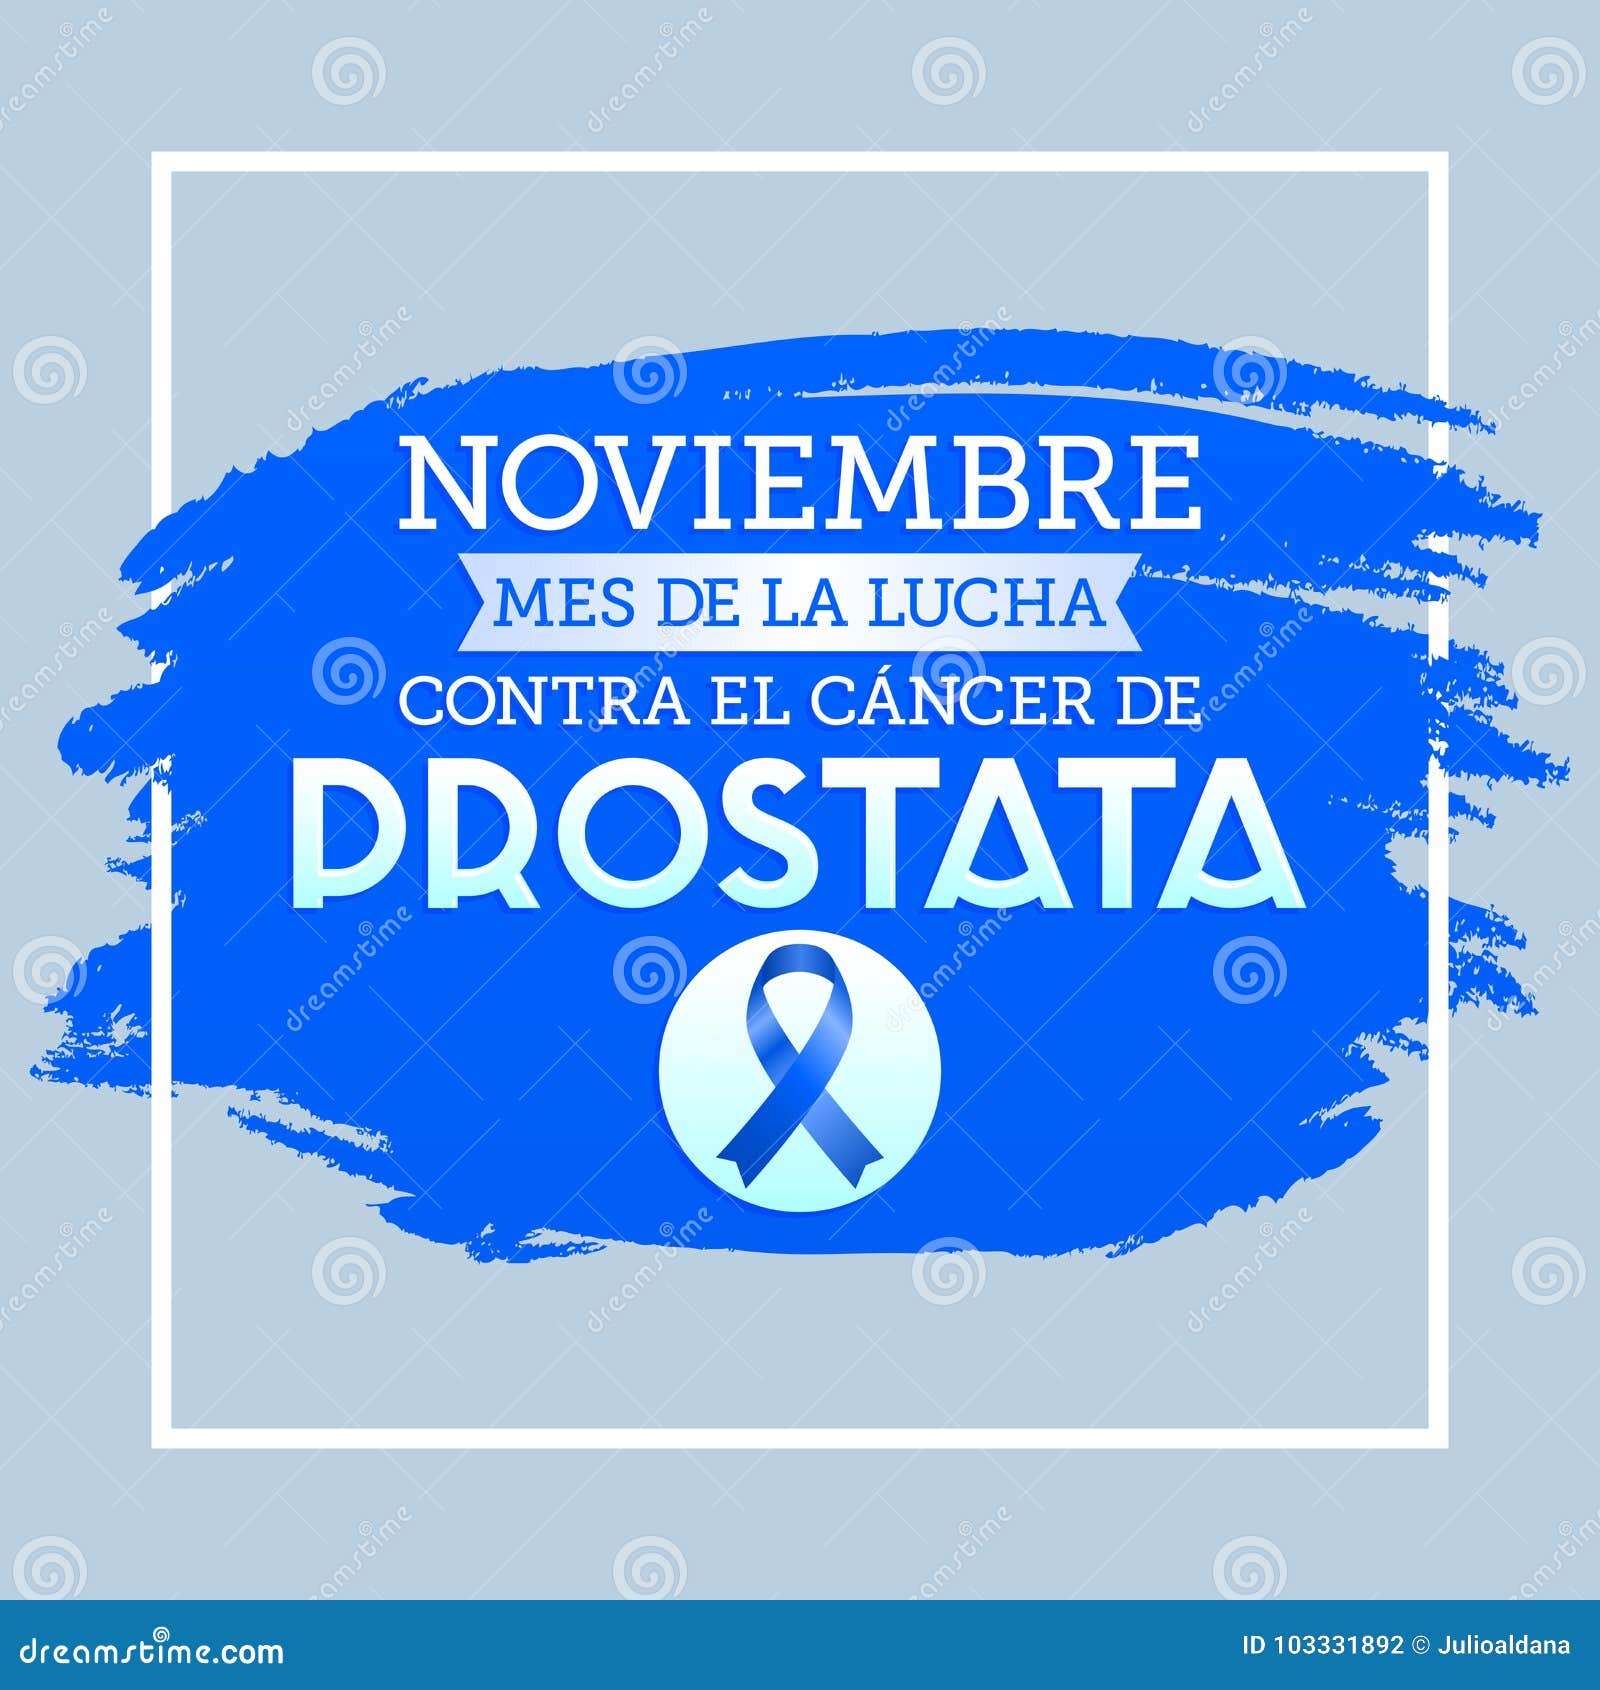 noviembre mes de la lucha contra el cancer de prostata, november month of fight against prostate cancer spanish text,